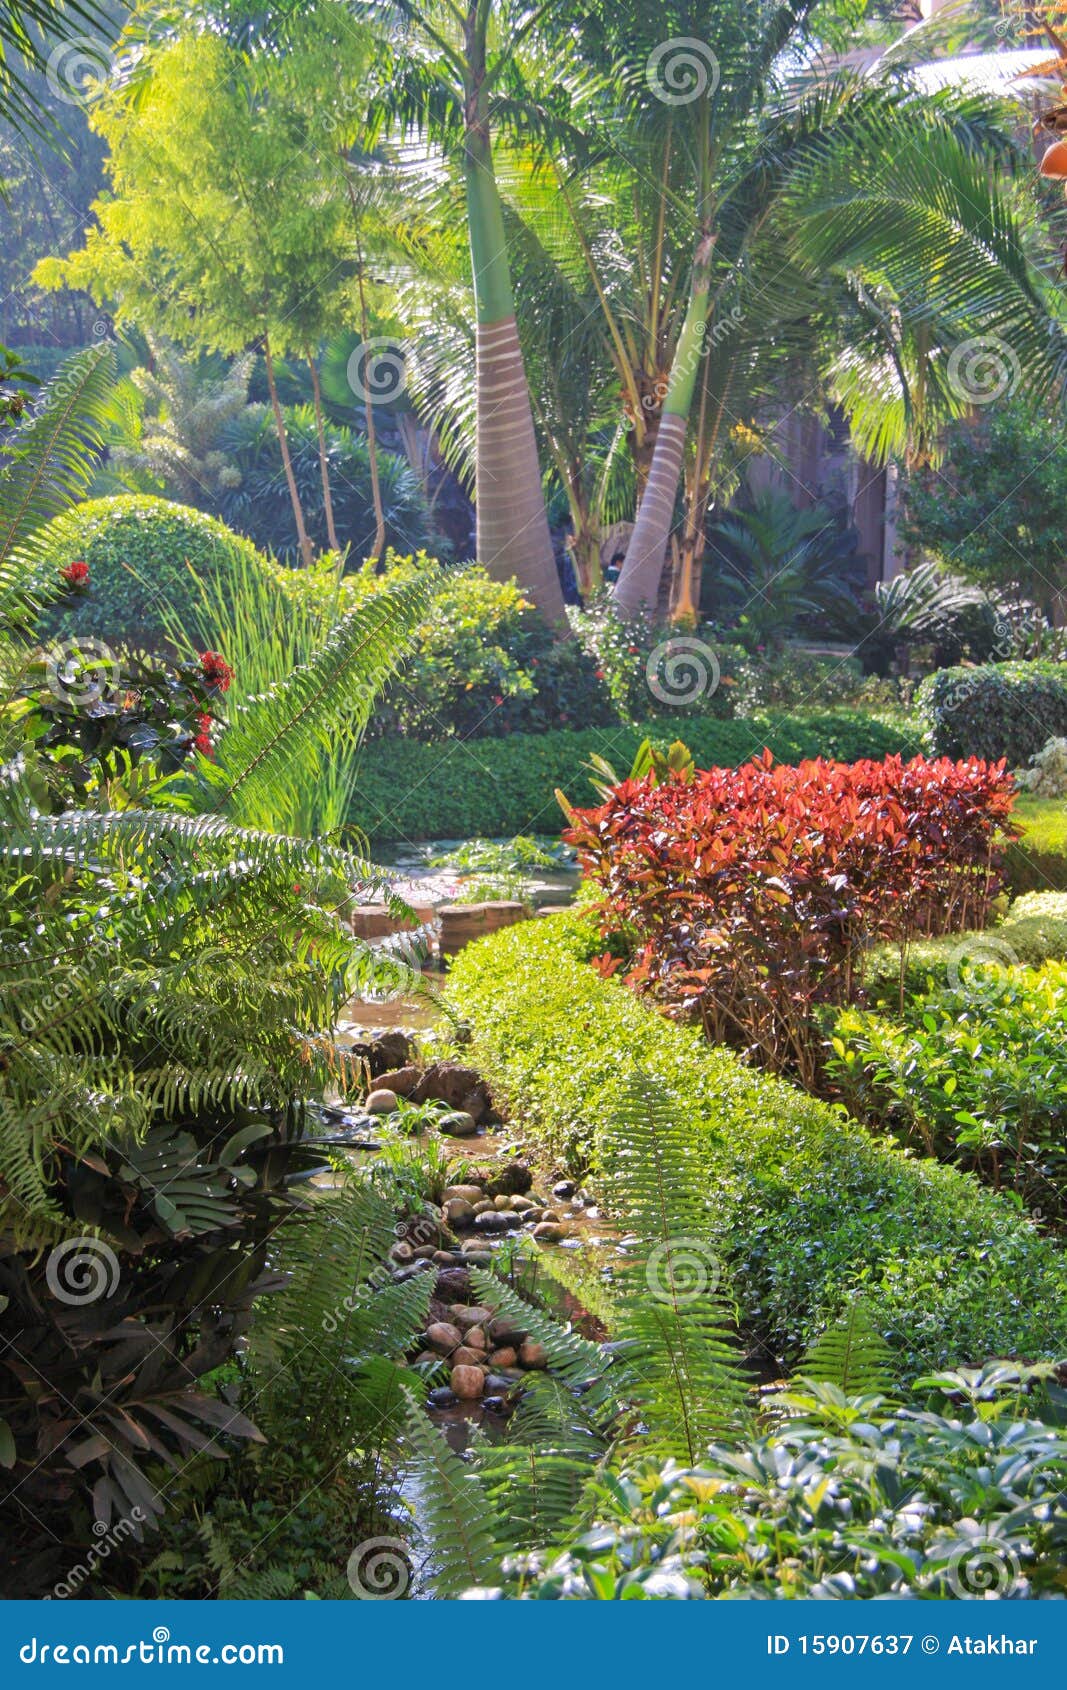 lush tropical garden in bangalore